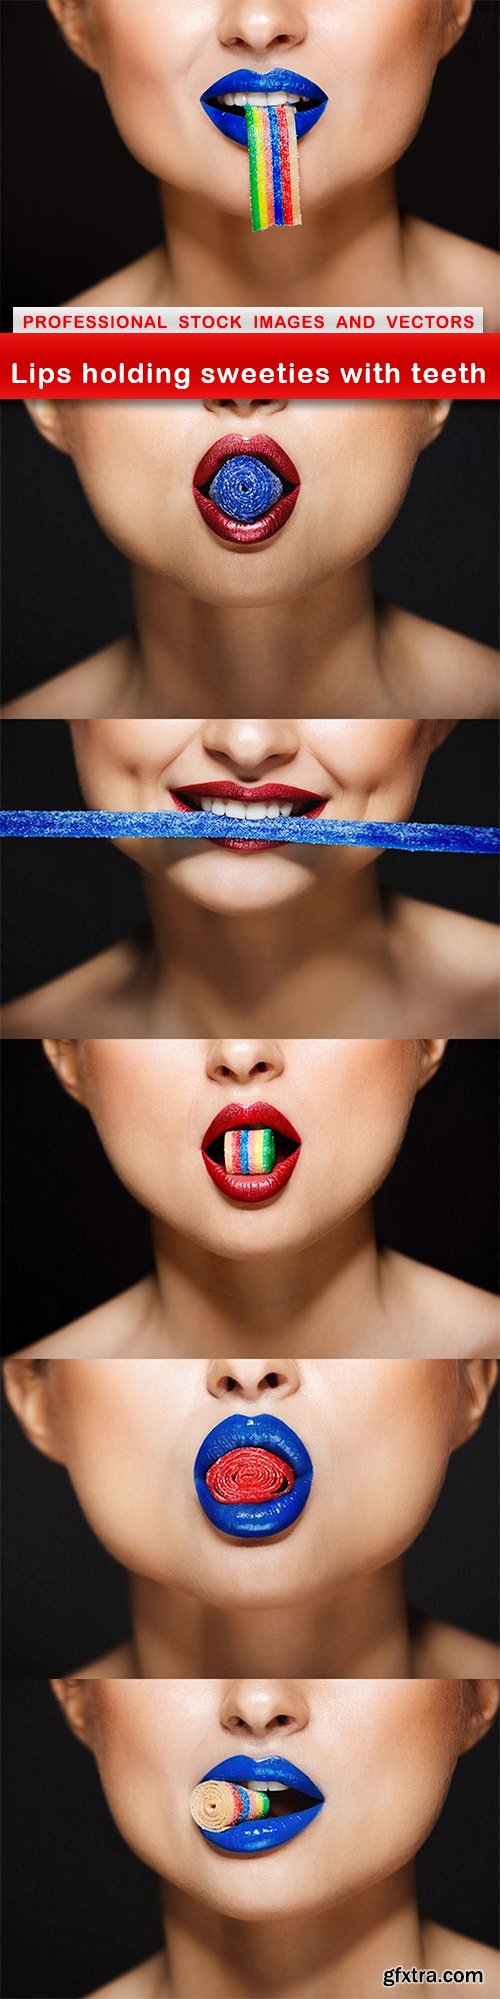 Lips holding sweeties with teeth - 6 UHQ JPEG